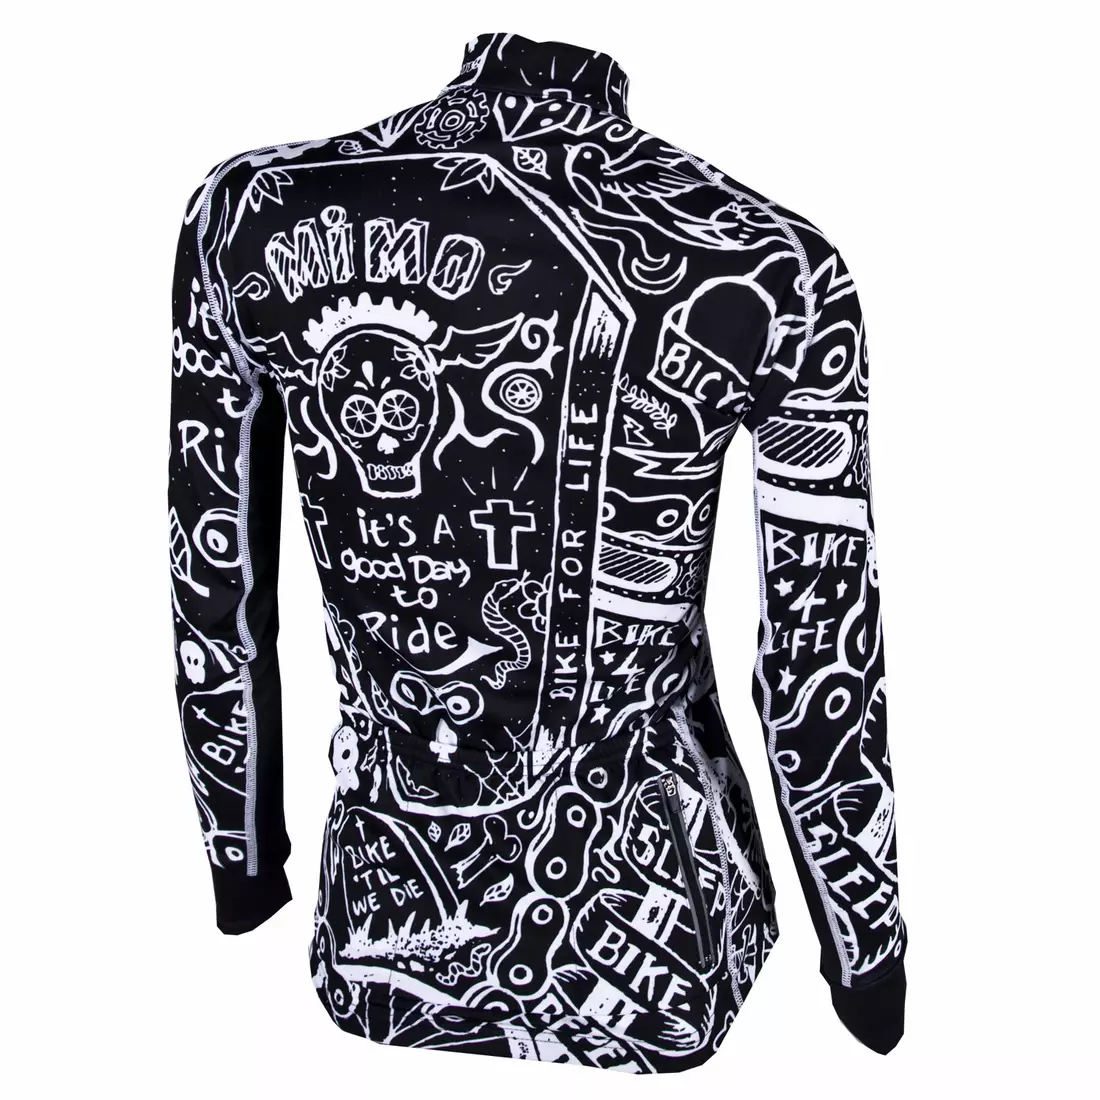 MikeSPORT DESIGN OLDSCHOOL TATTOO women's cycling sweatshirt